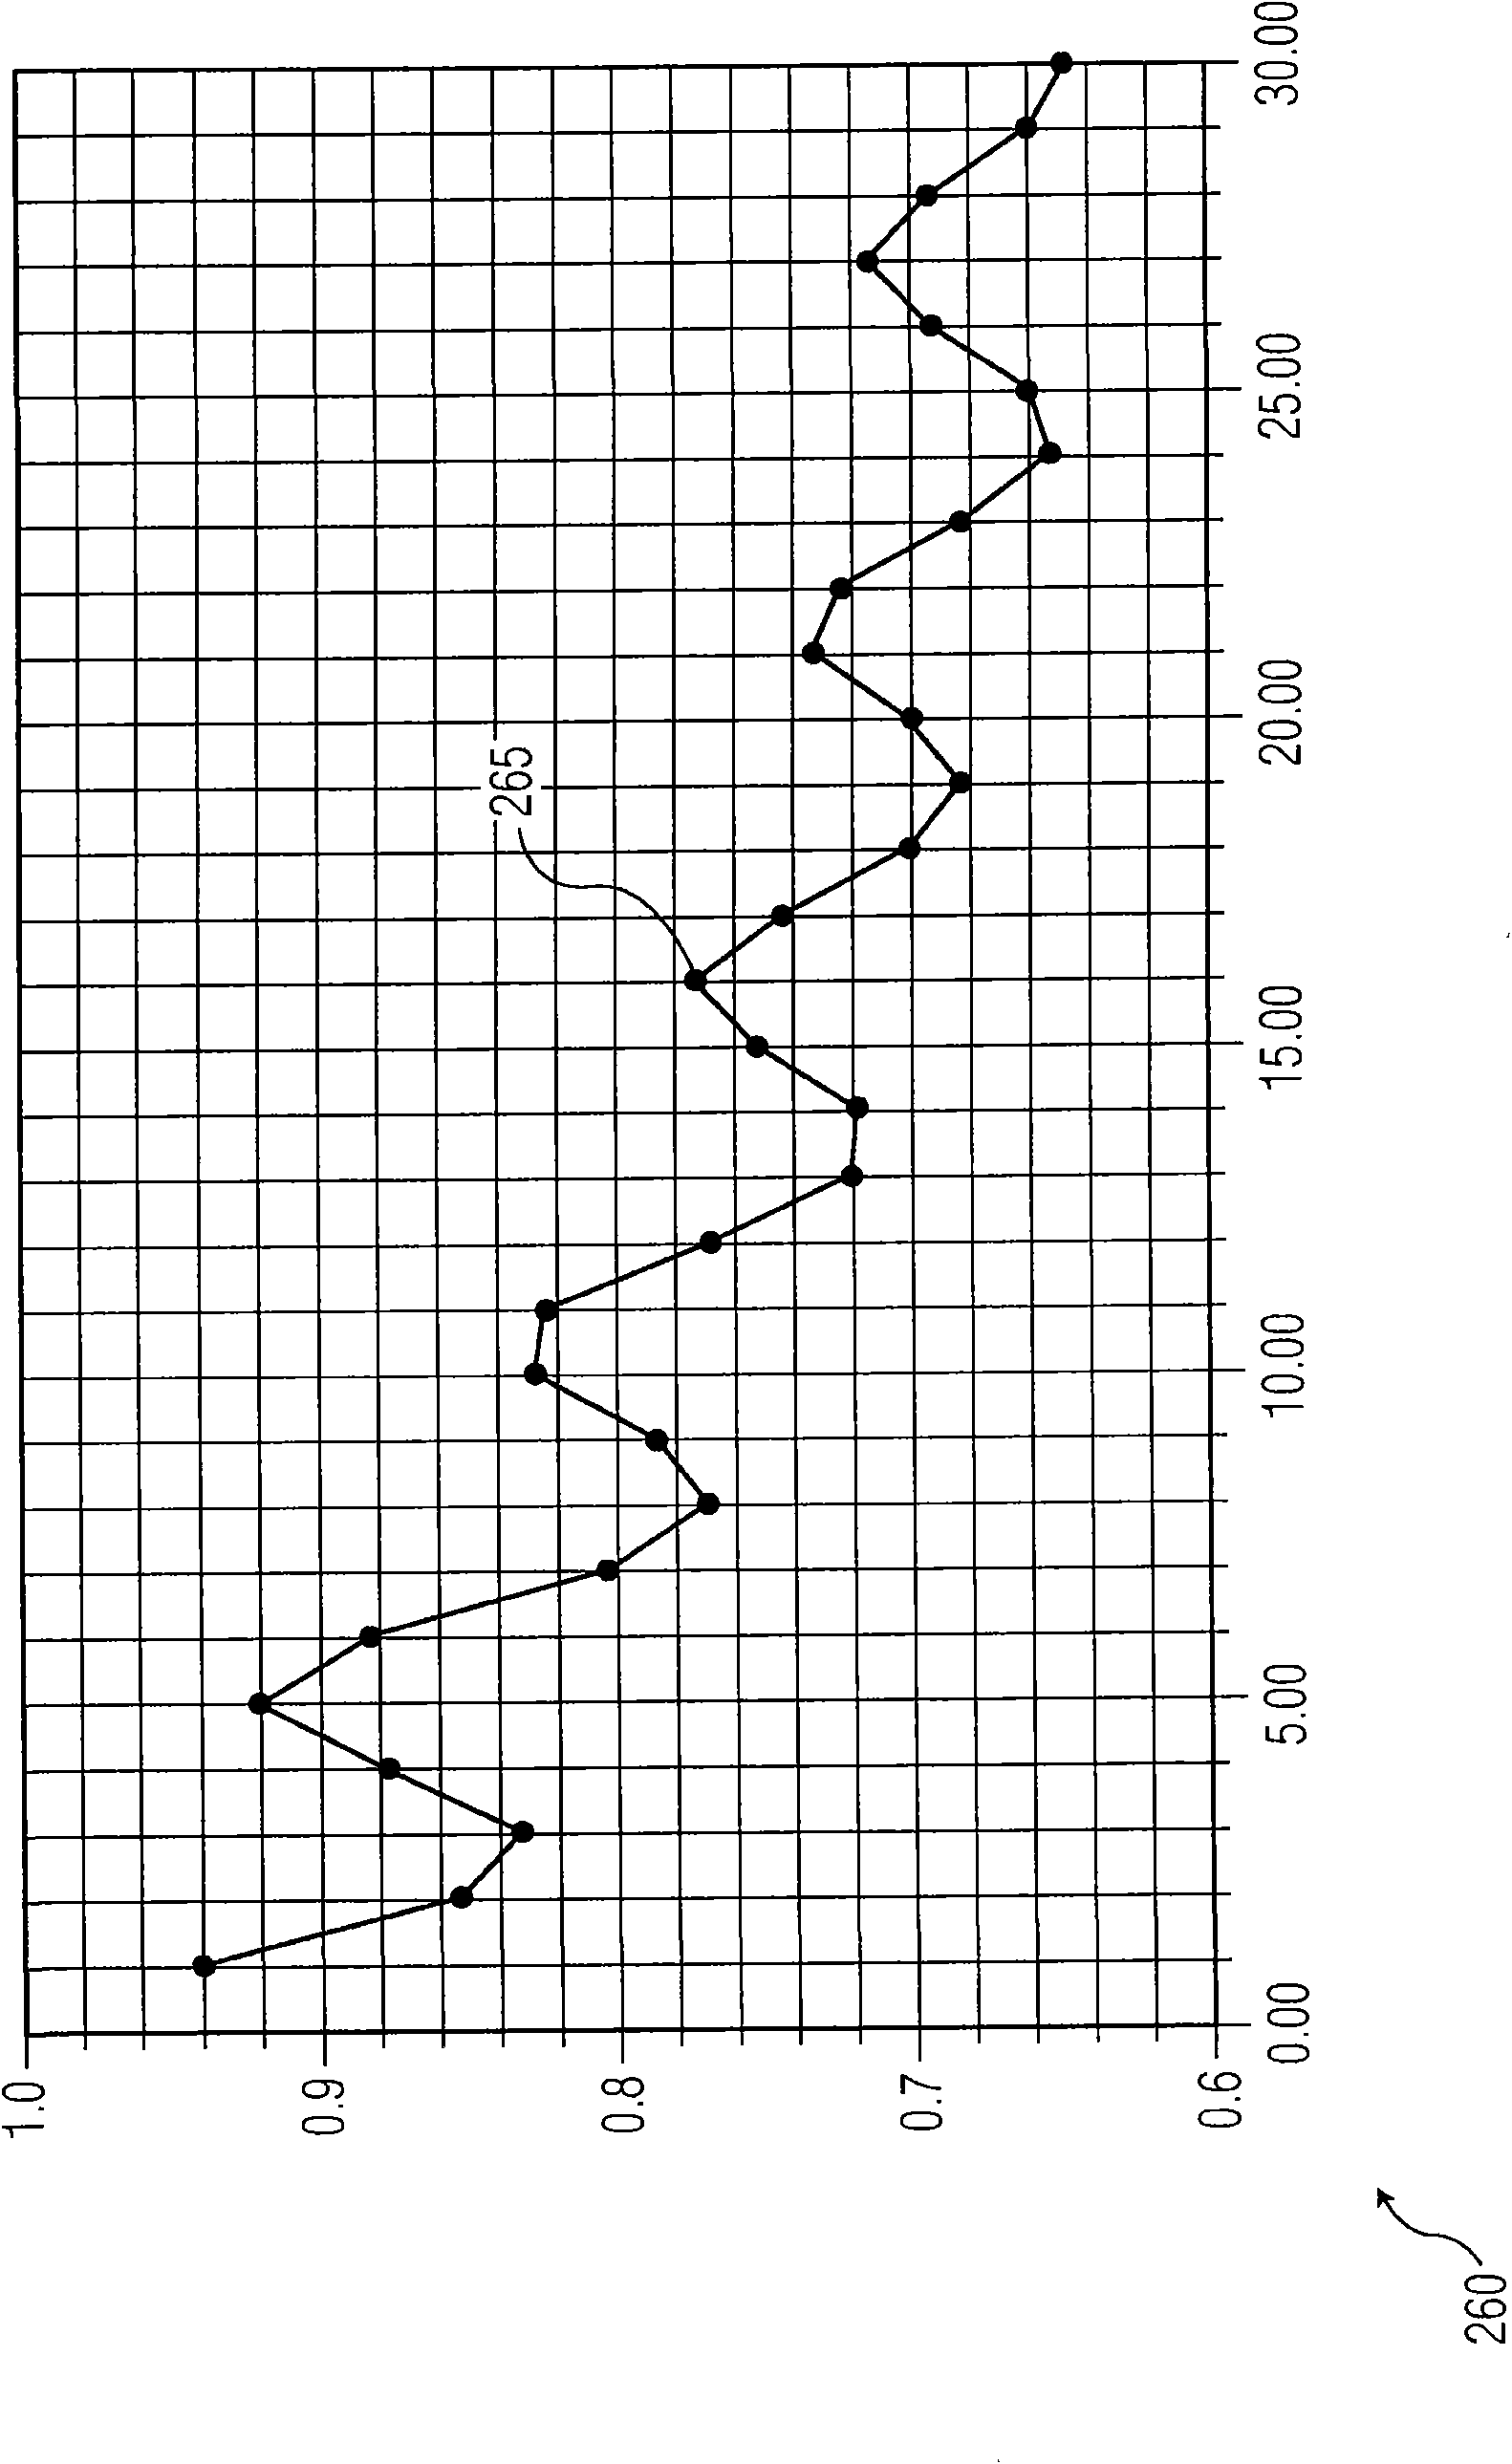 Design method for transmission lines using meta-materials